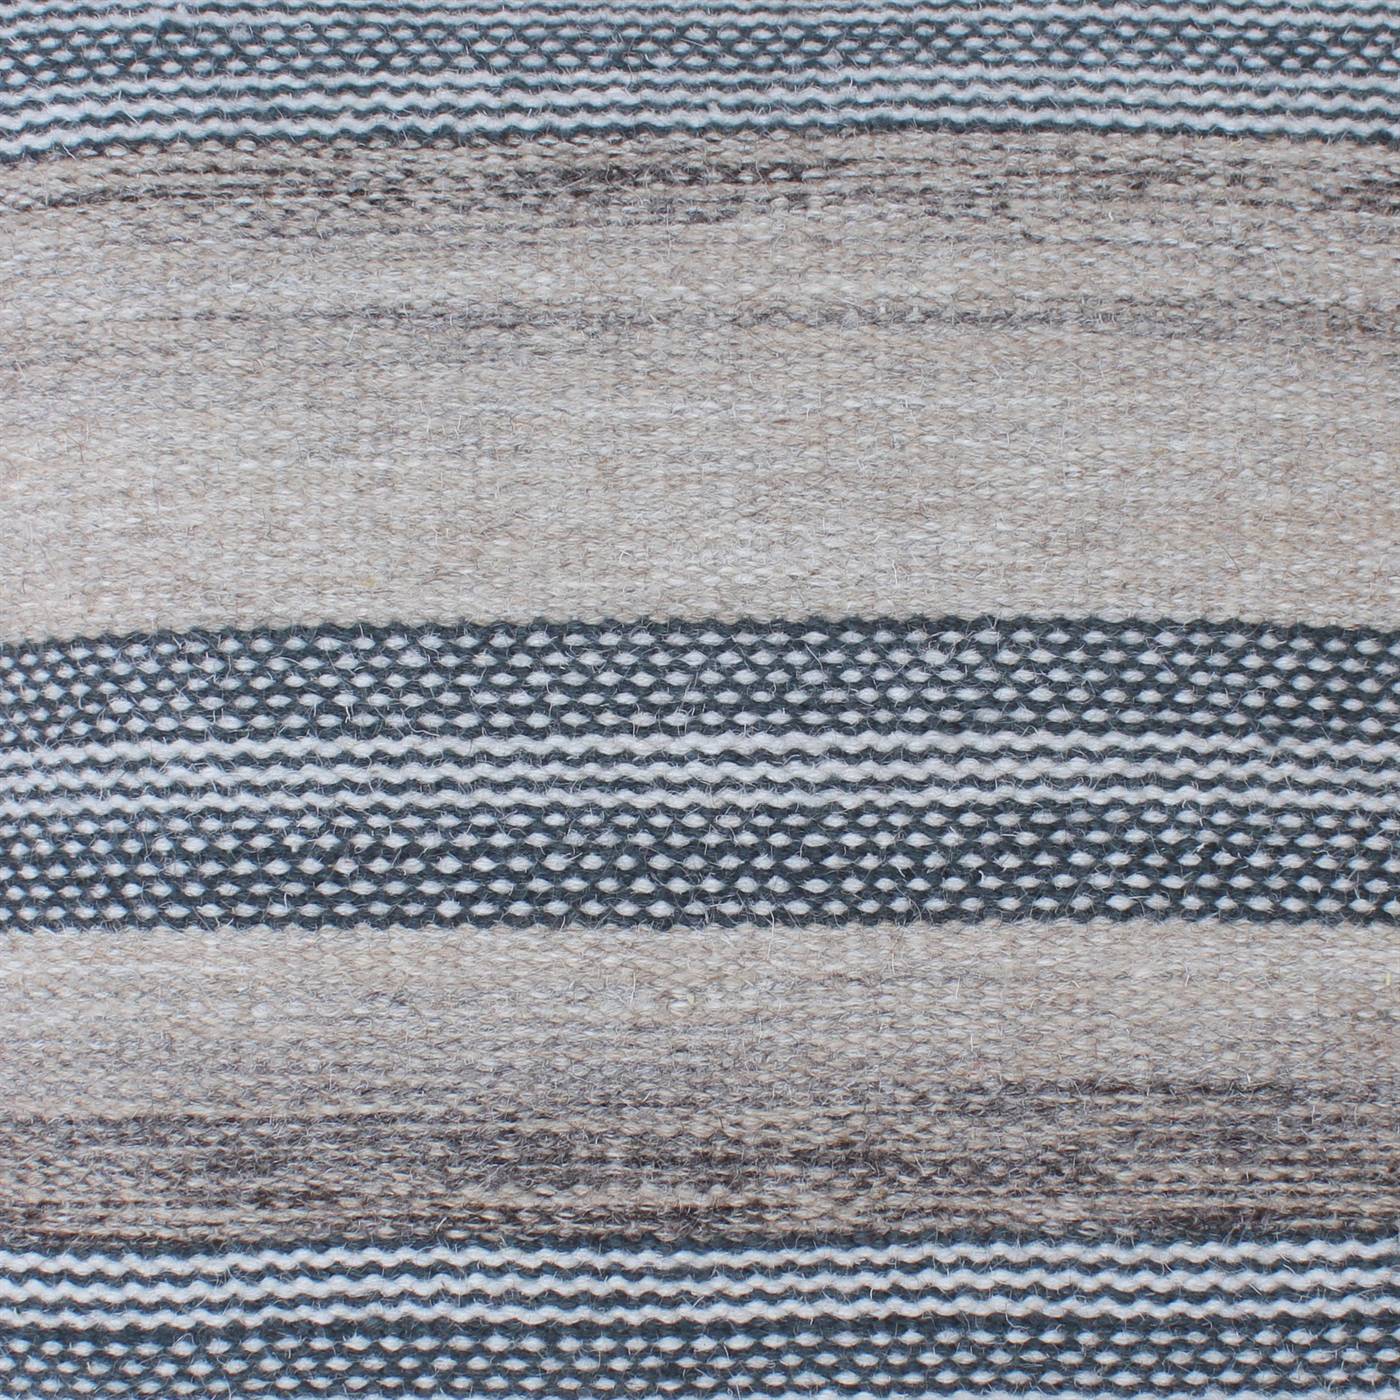 Trimble Cushion, 56x56 cm, Beige, Grey, Wool, Hand Woven, Pitloom, Flat Weave